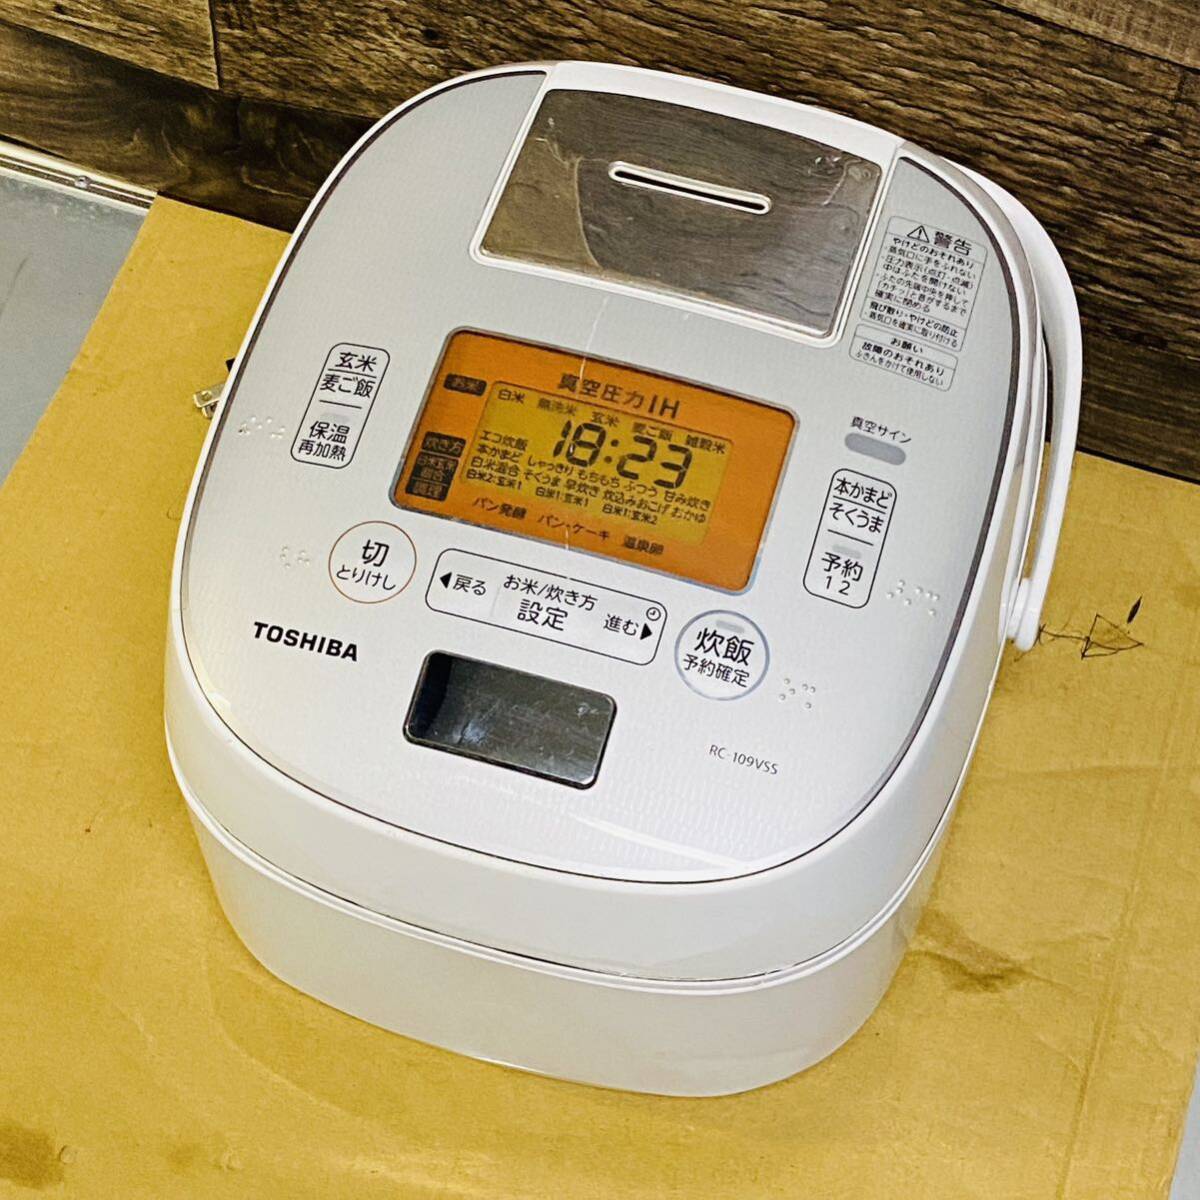  secondhand goods Toshiba vacuum pressure IH rice cooker RC-109VSS 5.5... junk 